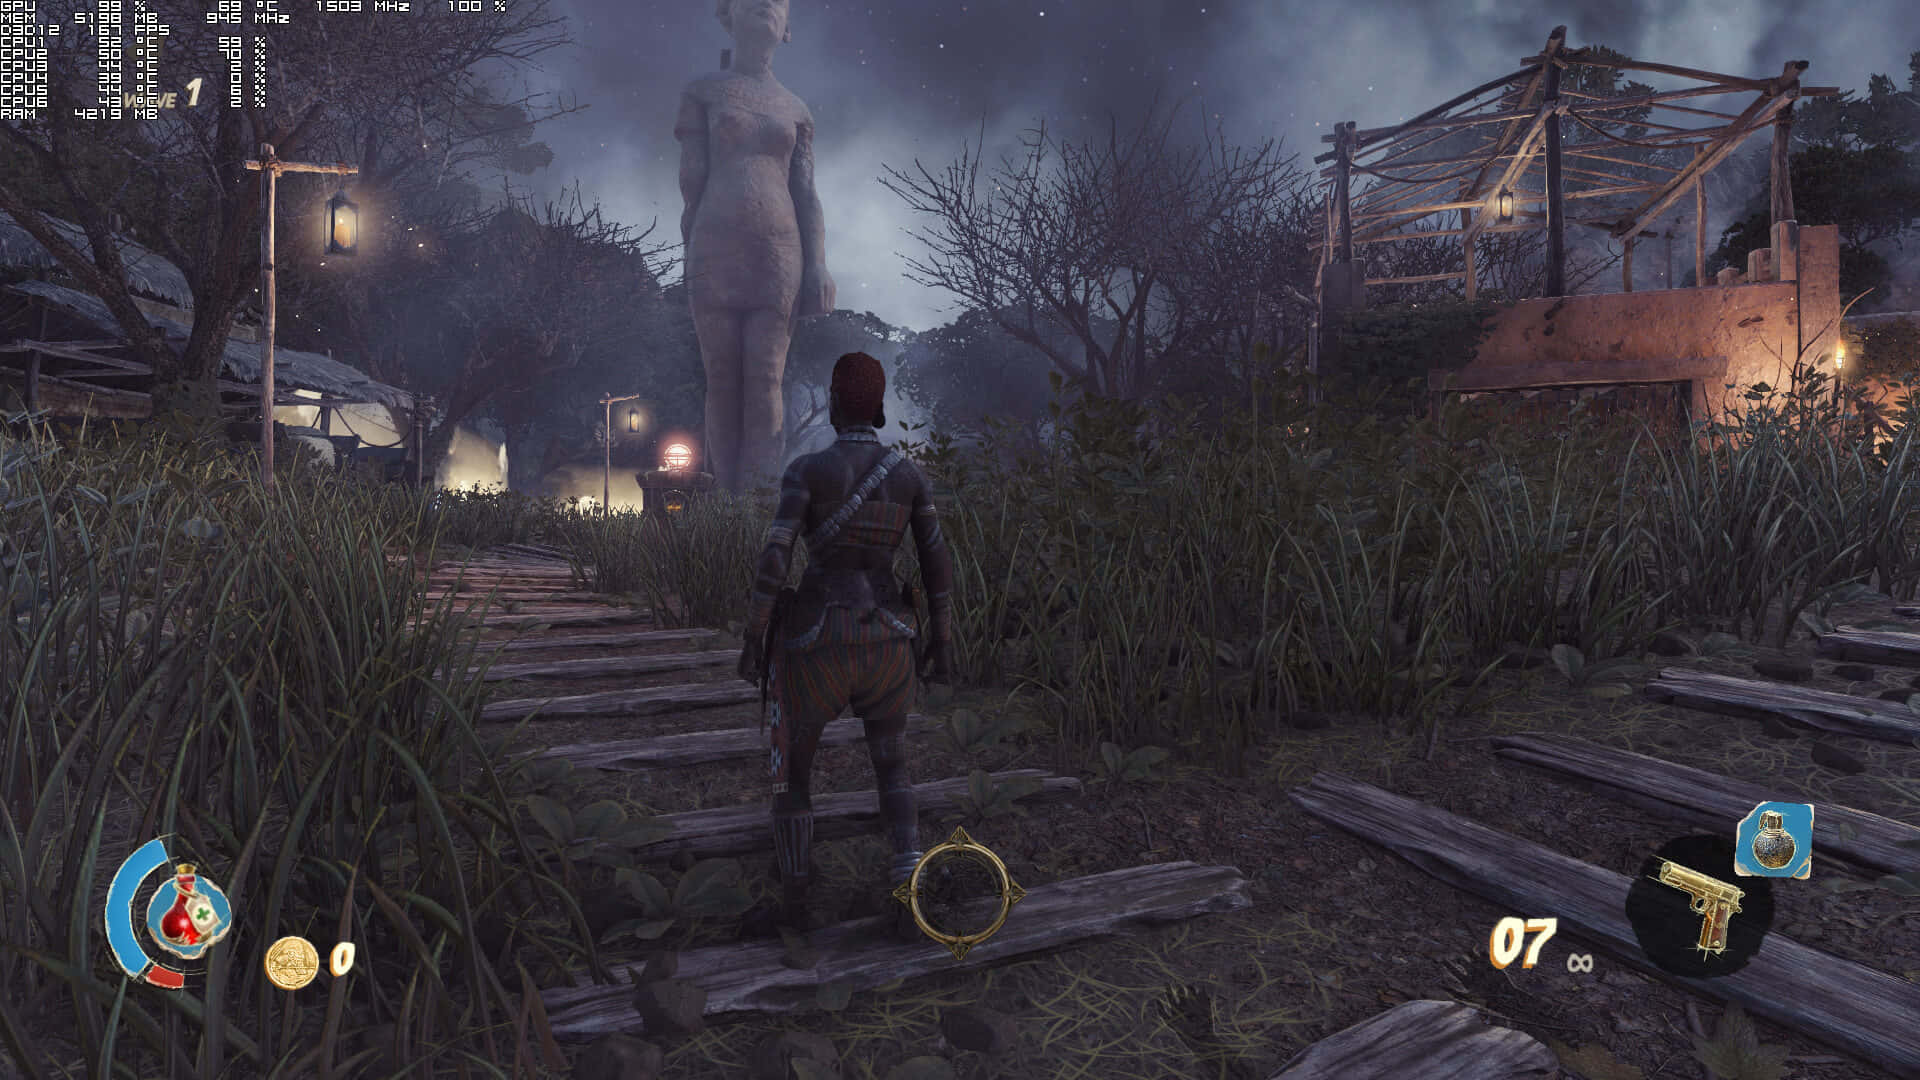 A Video Game Showing A Man Walking Through A Dark Area